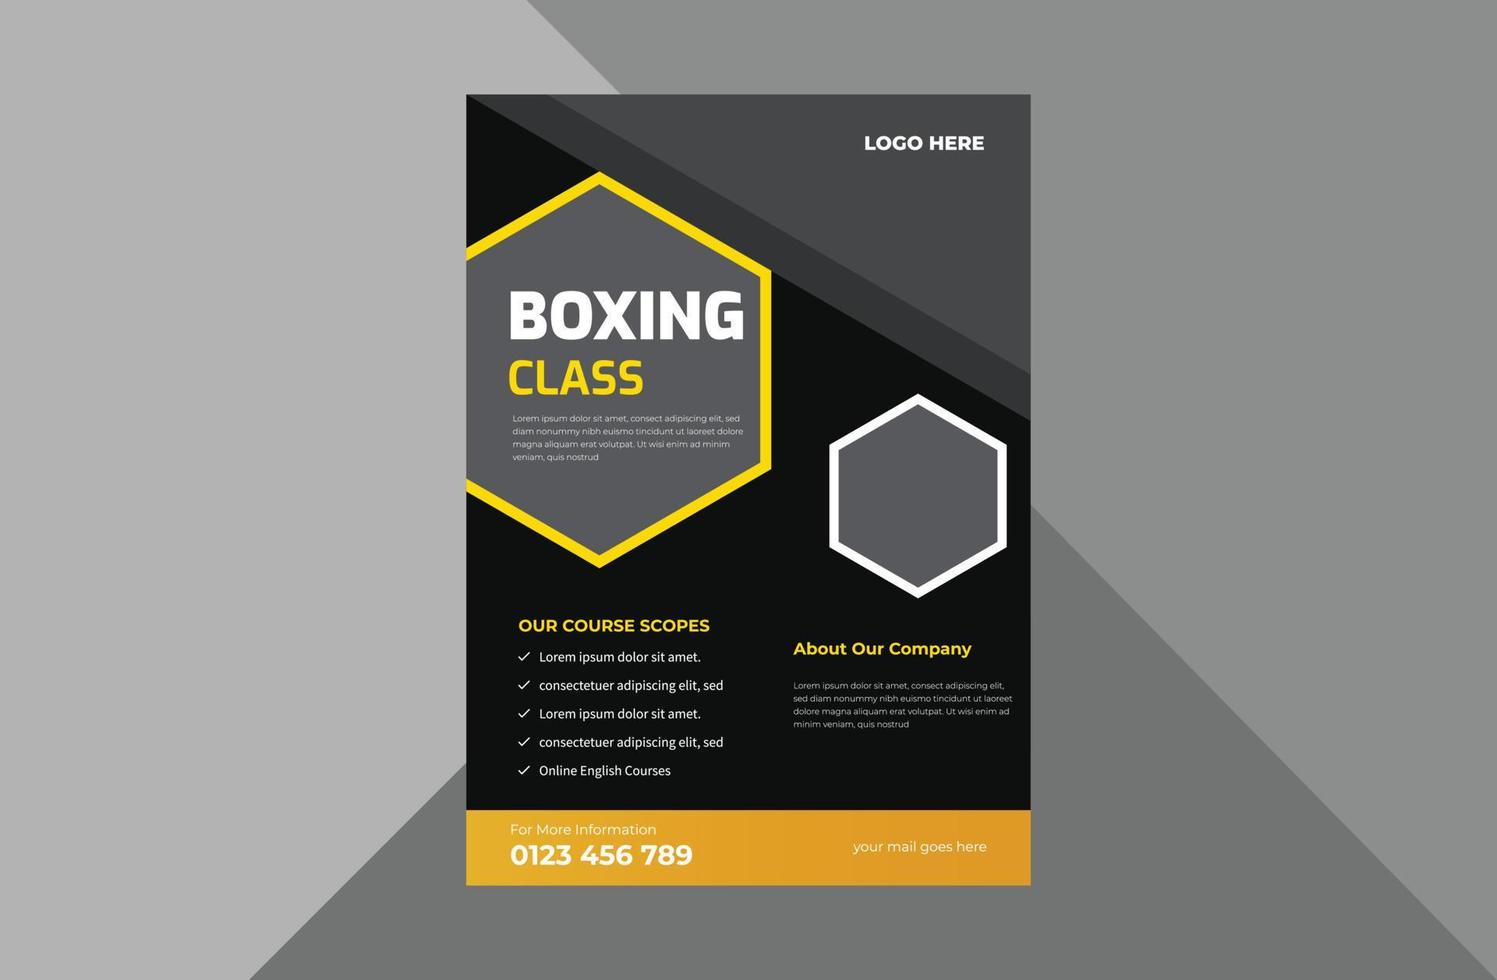 boxningsskolans flygblad designmall. boxning sport affisch broschyr design. a4-mall, broschyrdesign, omslag, flygblad, affisch, tryckklar vektor